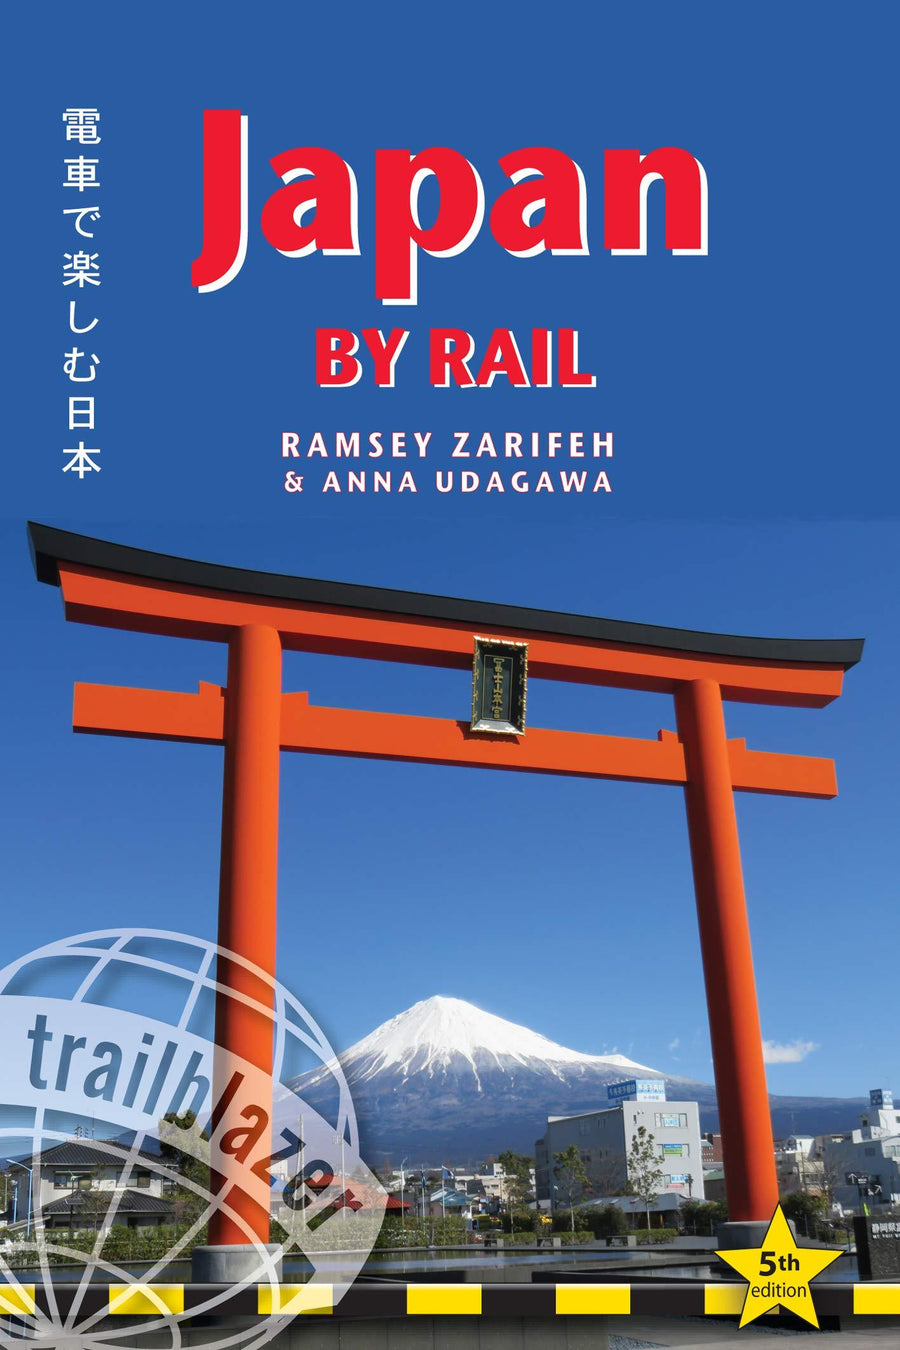 Guide de voyage (en anglais) - Japan by rail | Trailblazer guide de voyage Trailblazer 